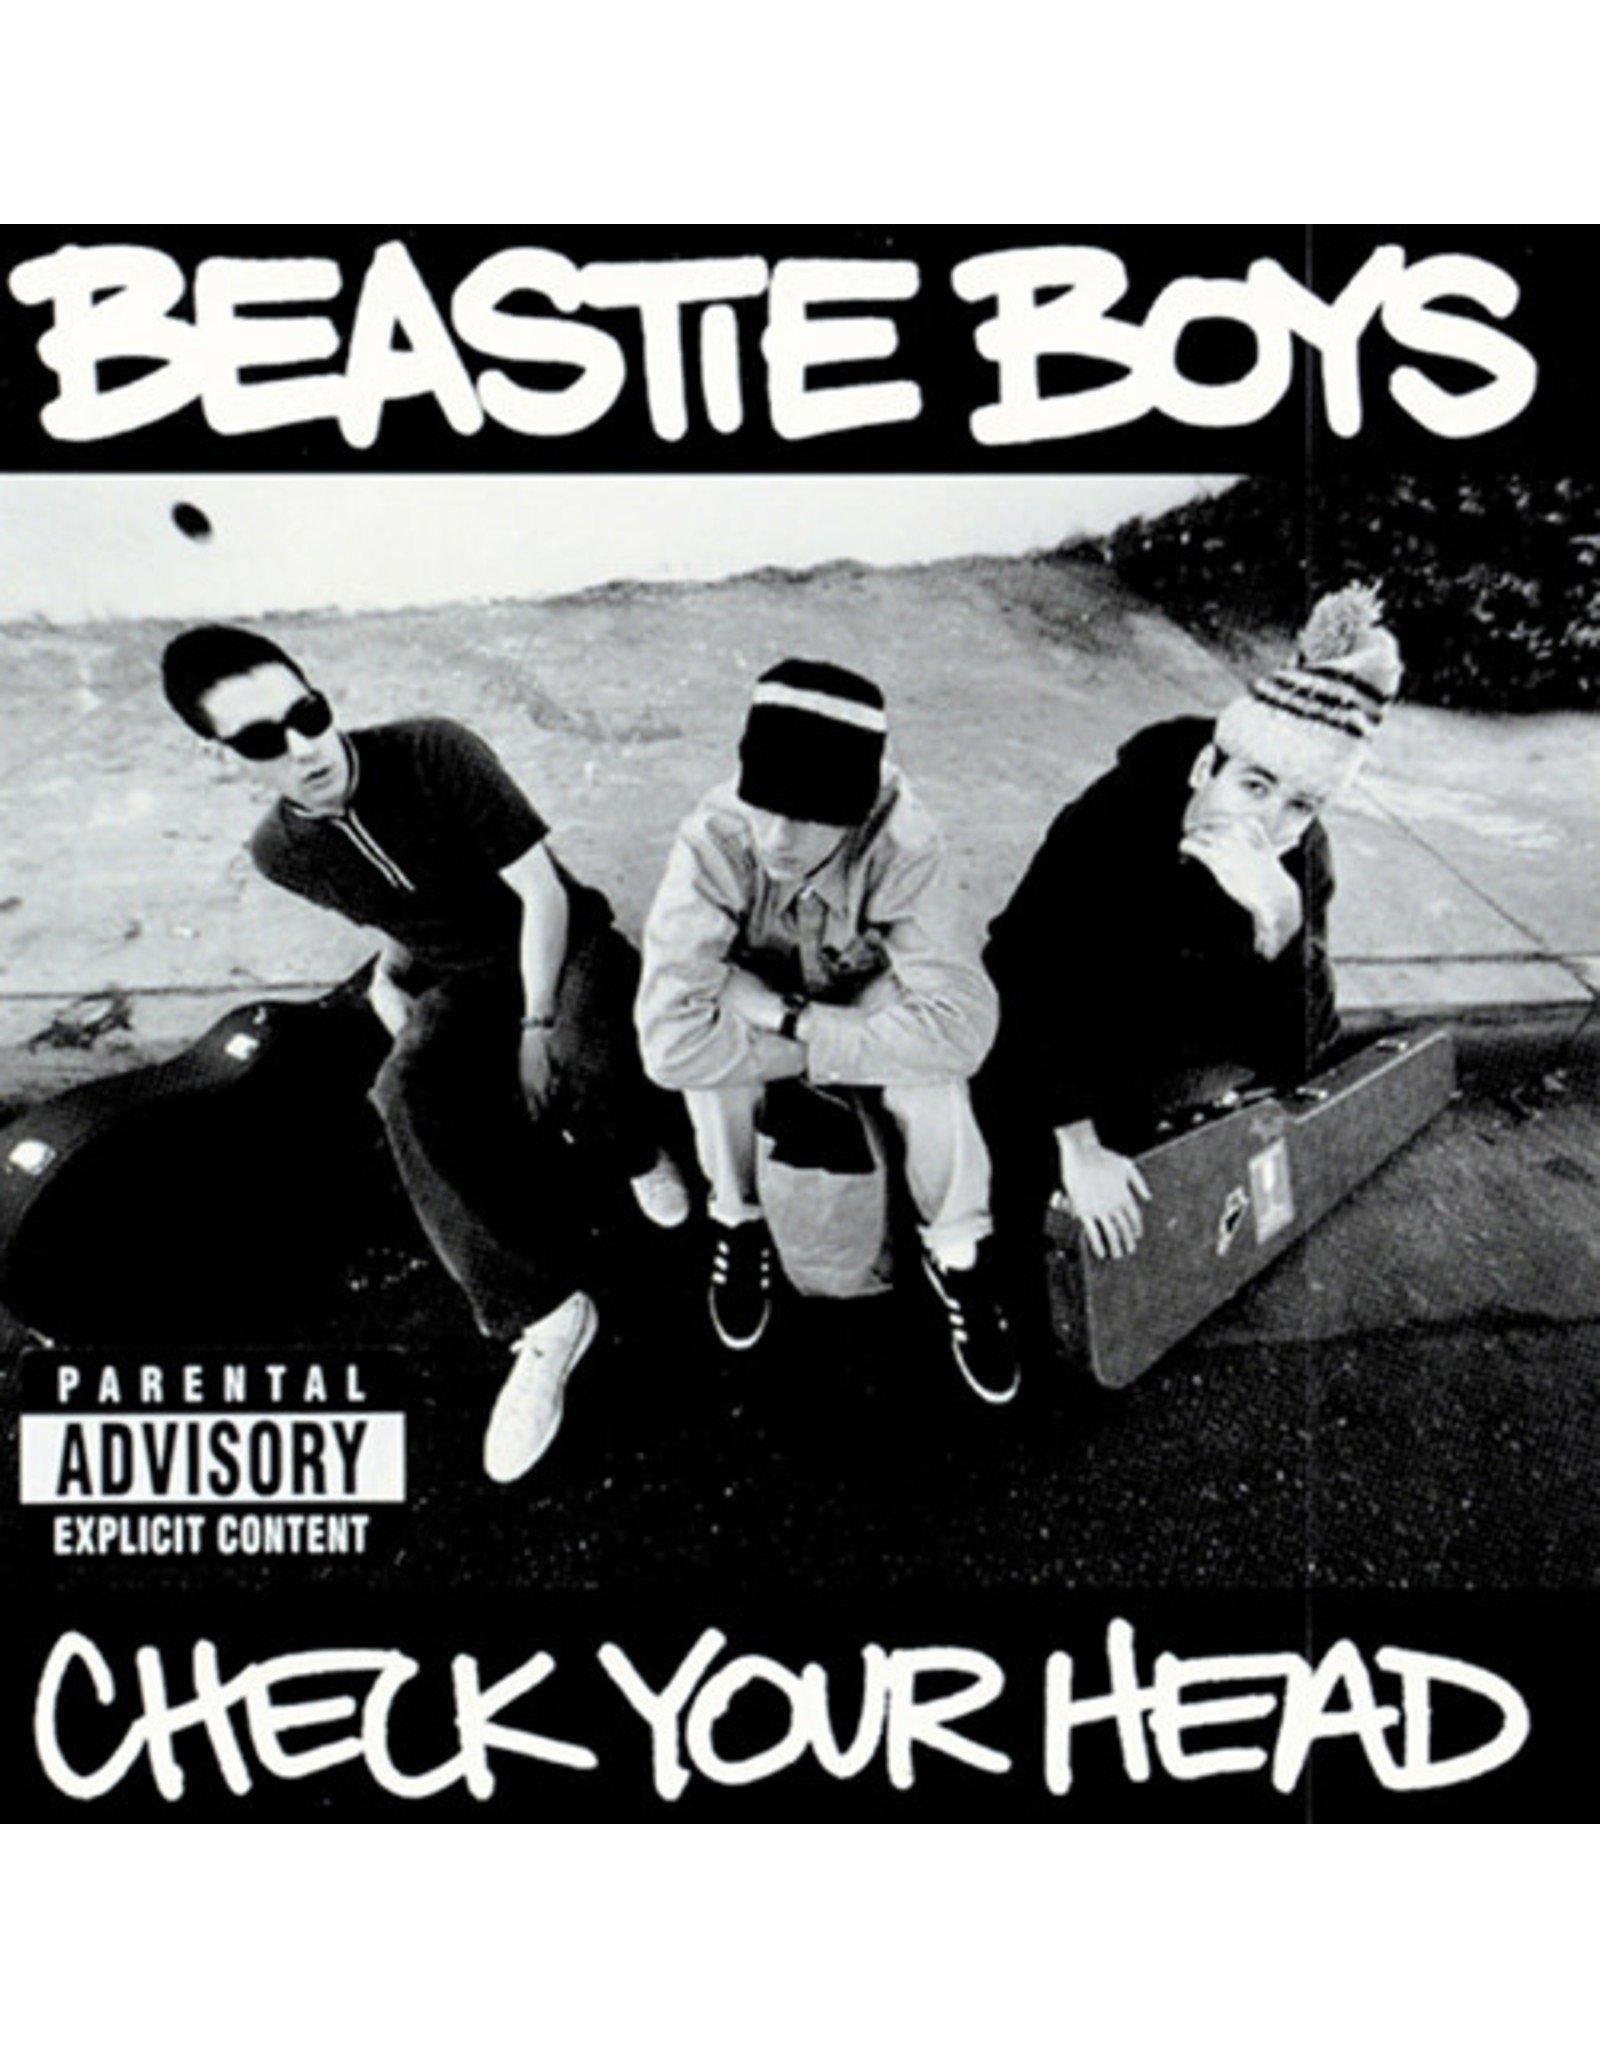 Capitol Beastie Boys: Check Your Head LP